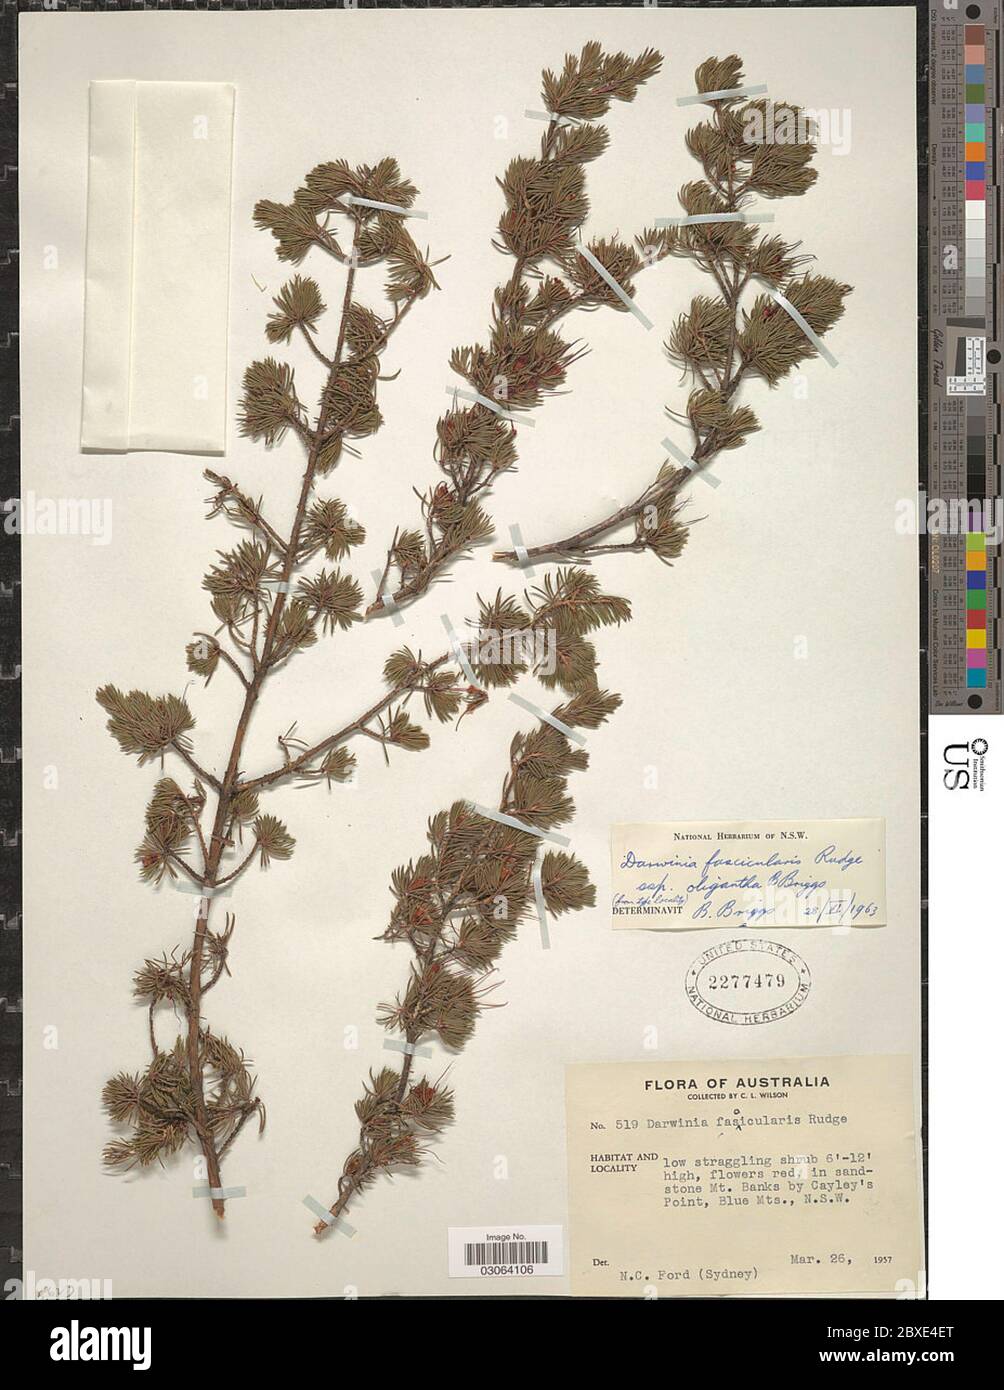 Darwinia fascicularis Rudge Darwinia fascicularis Rudge. Stock Photo